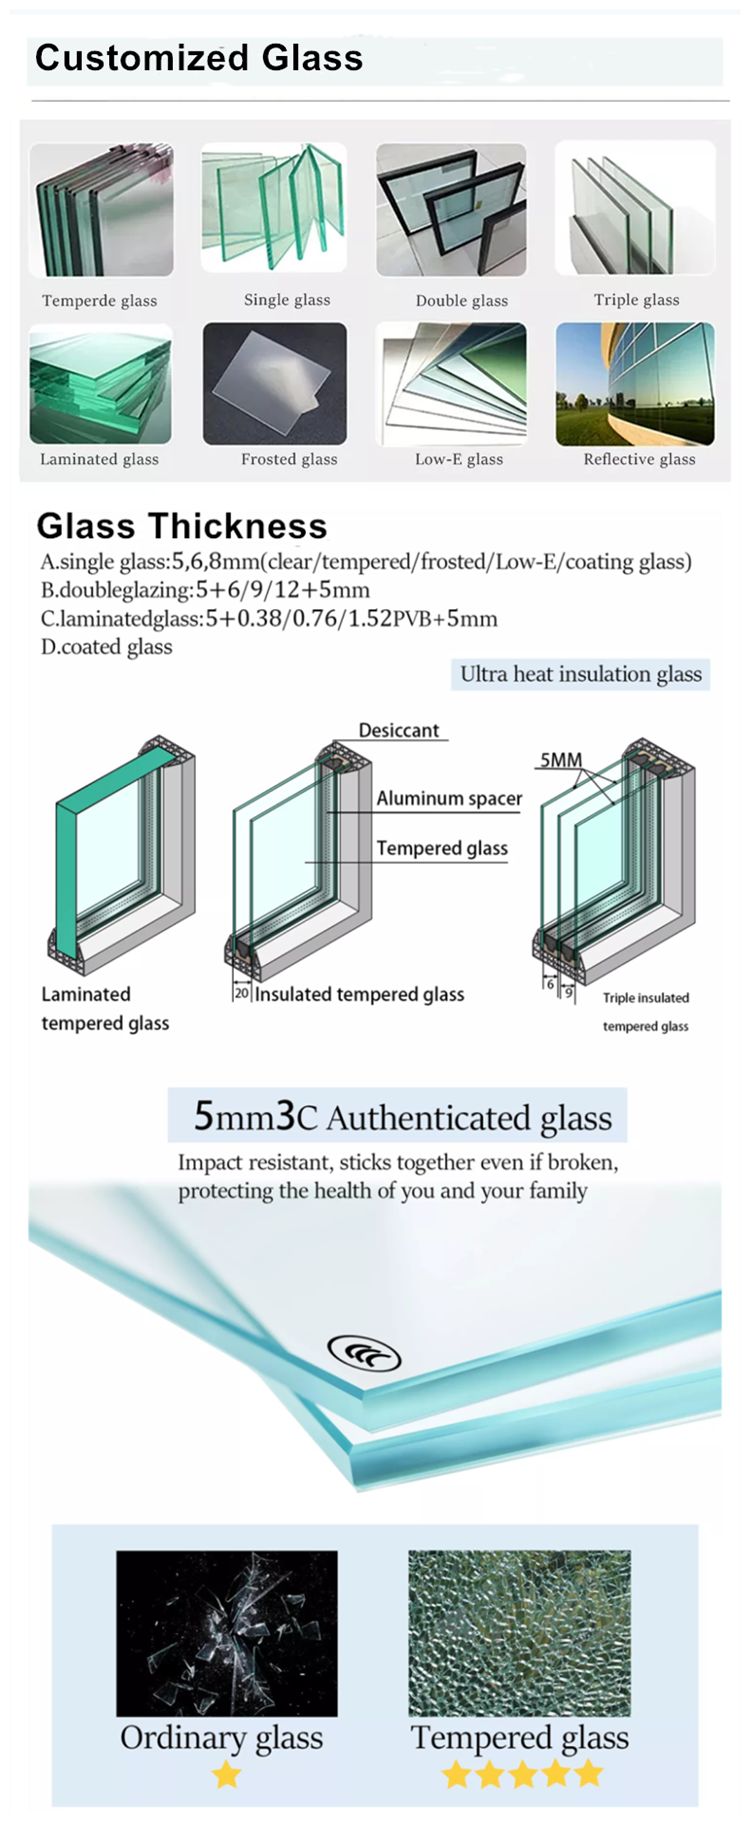 customized glass